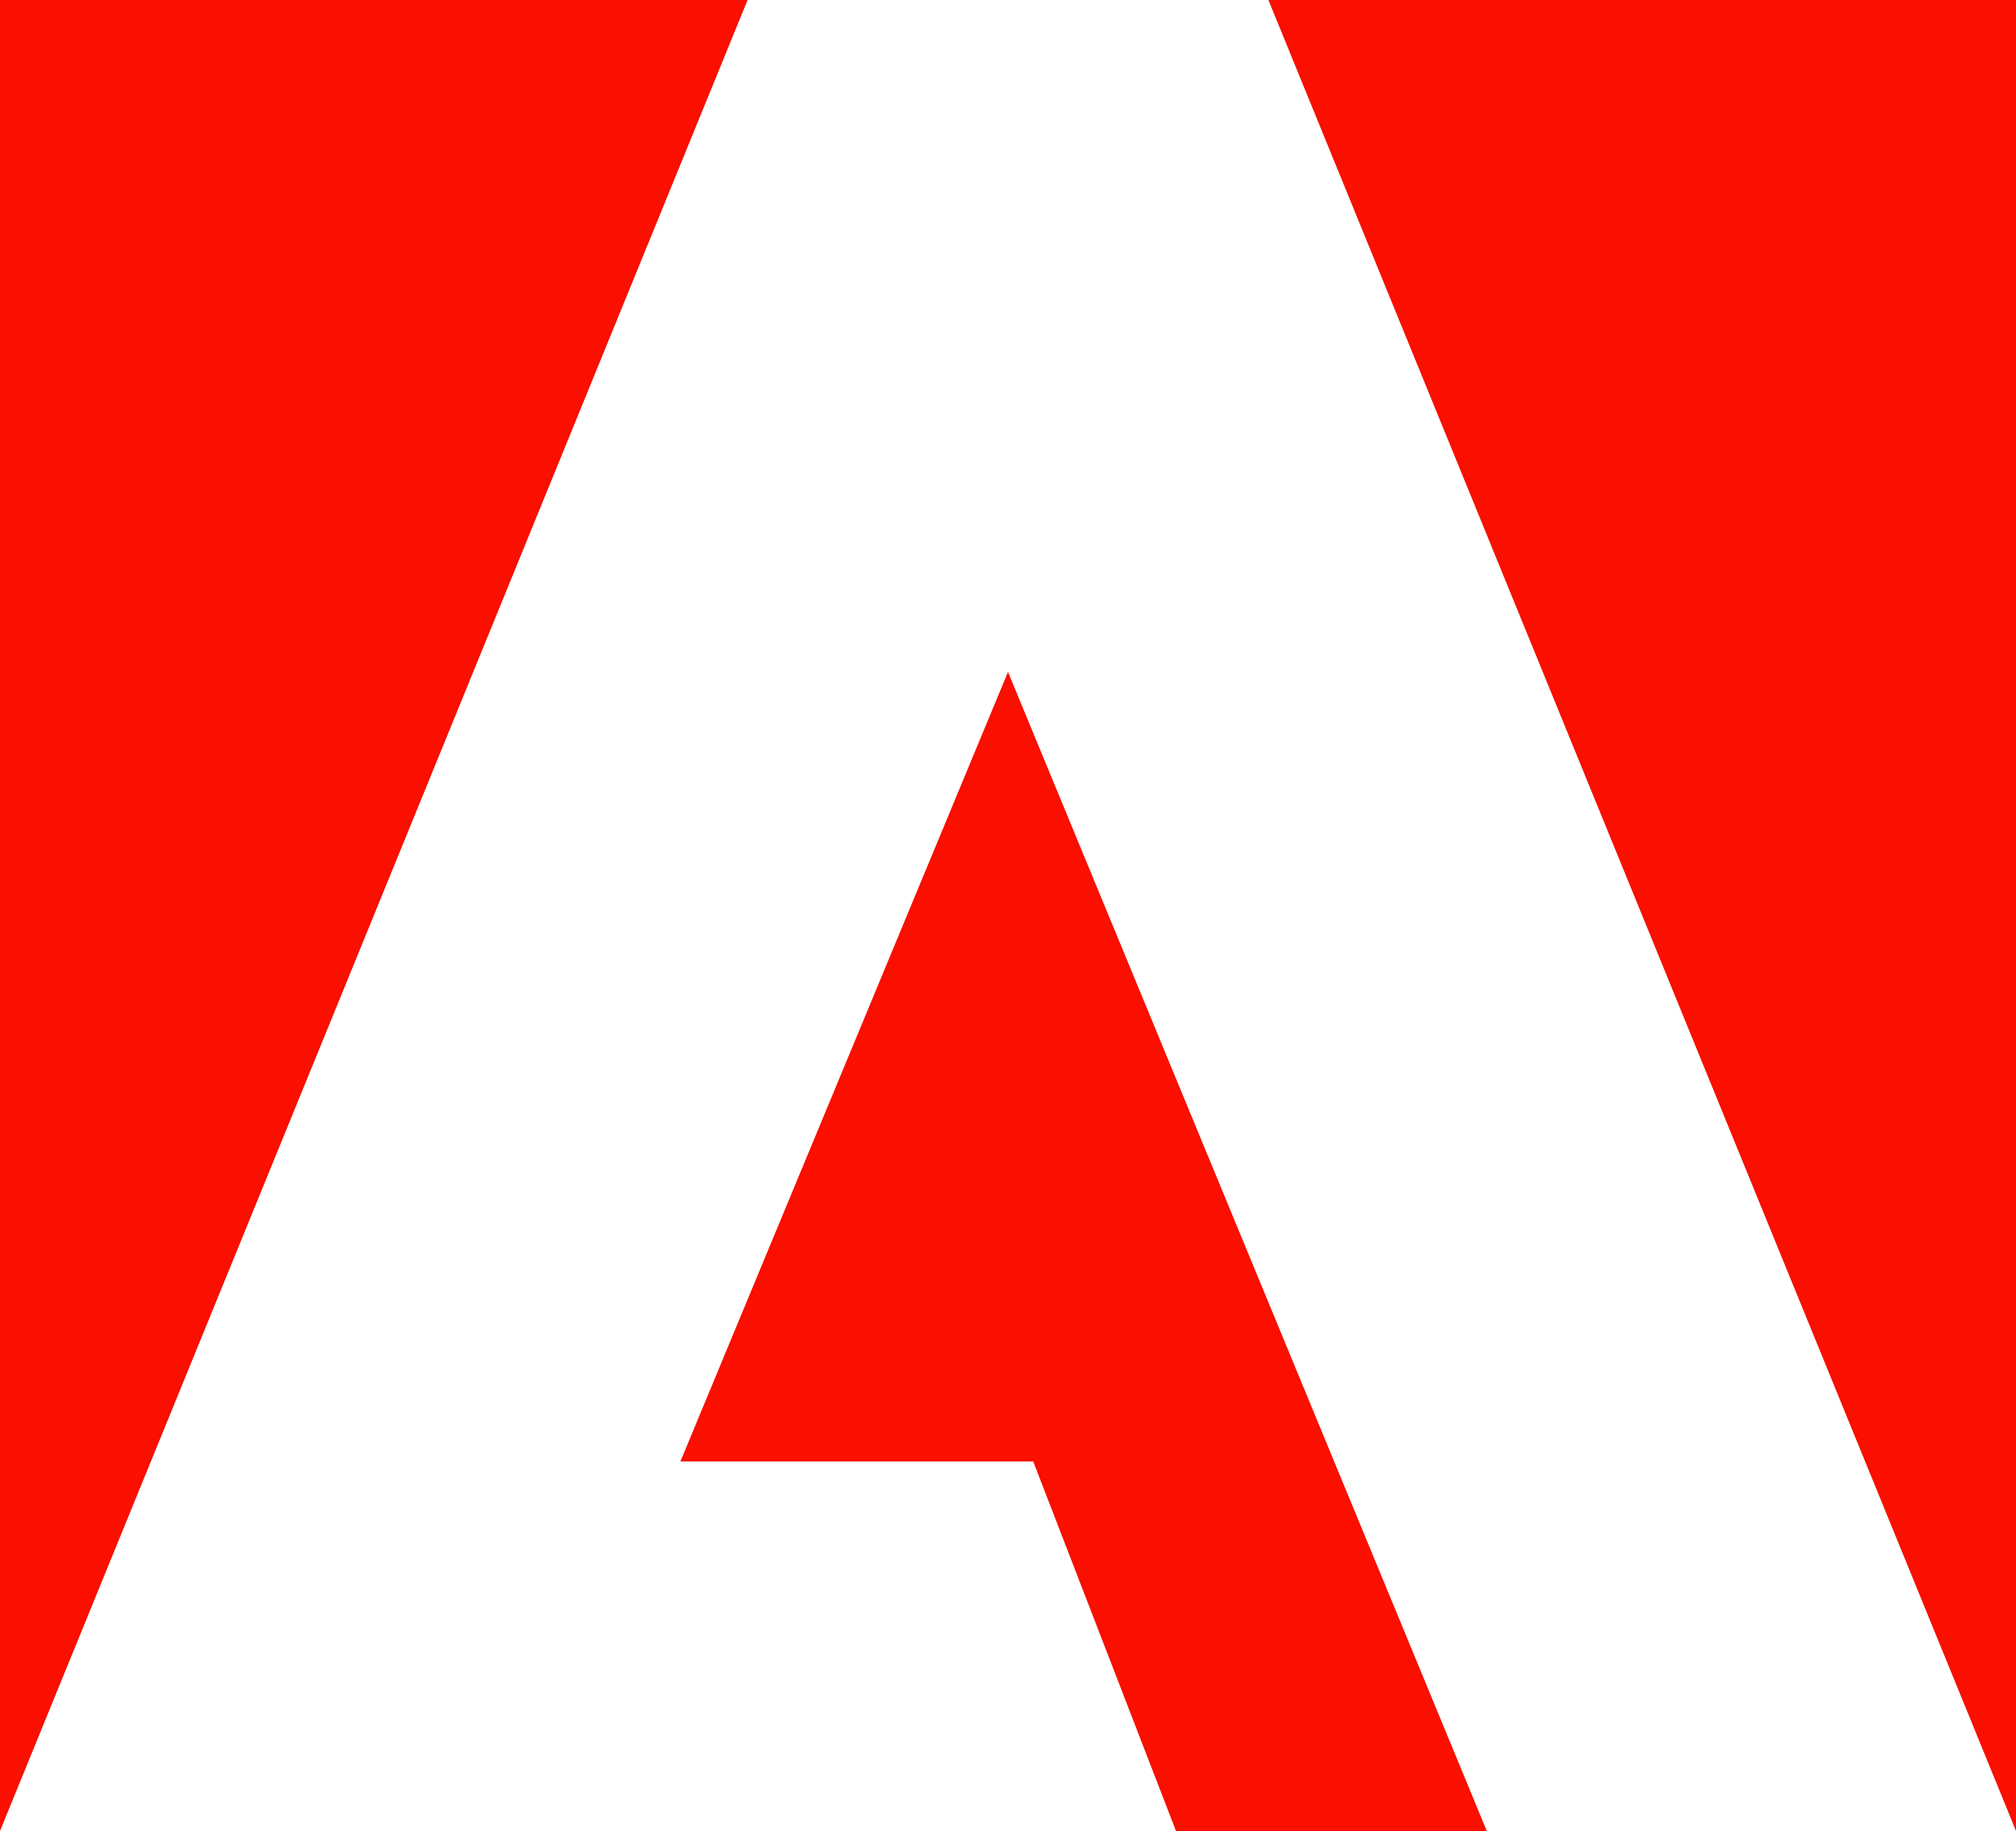 Adobe Logo Transparent PNG